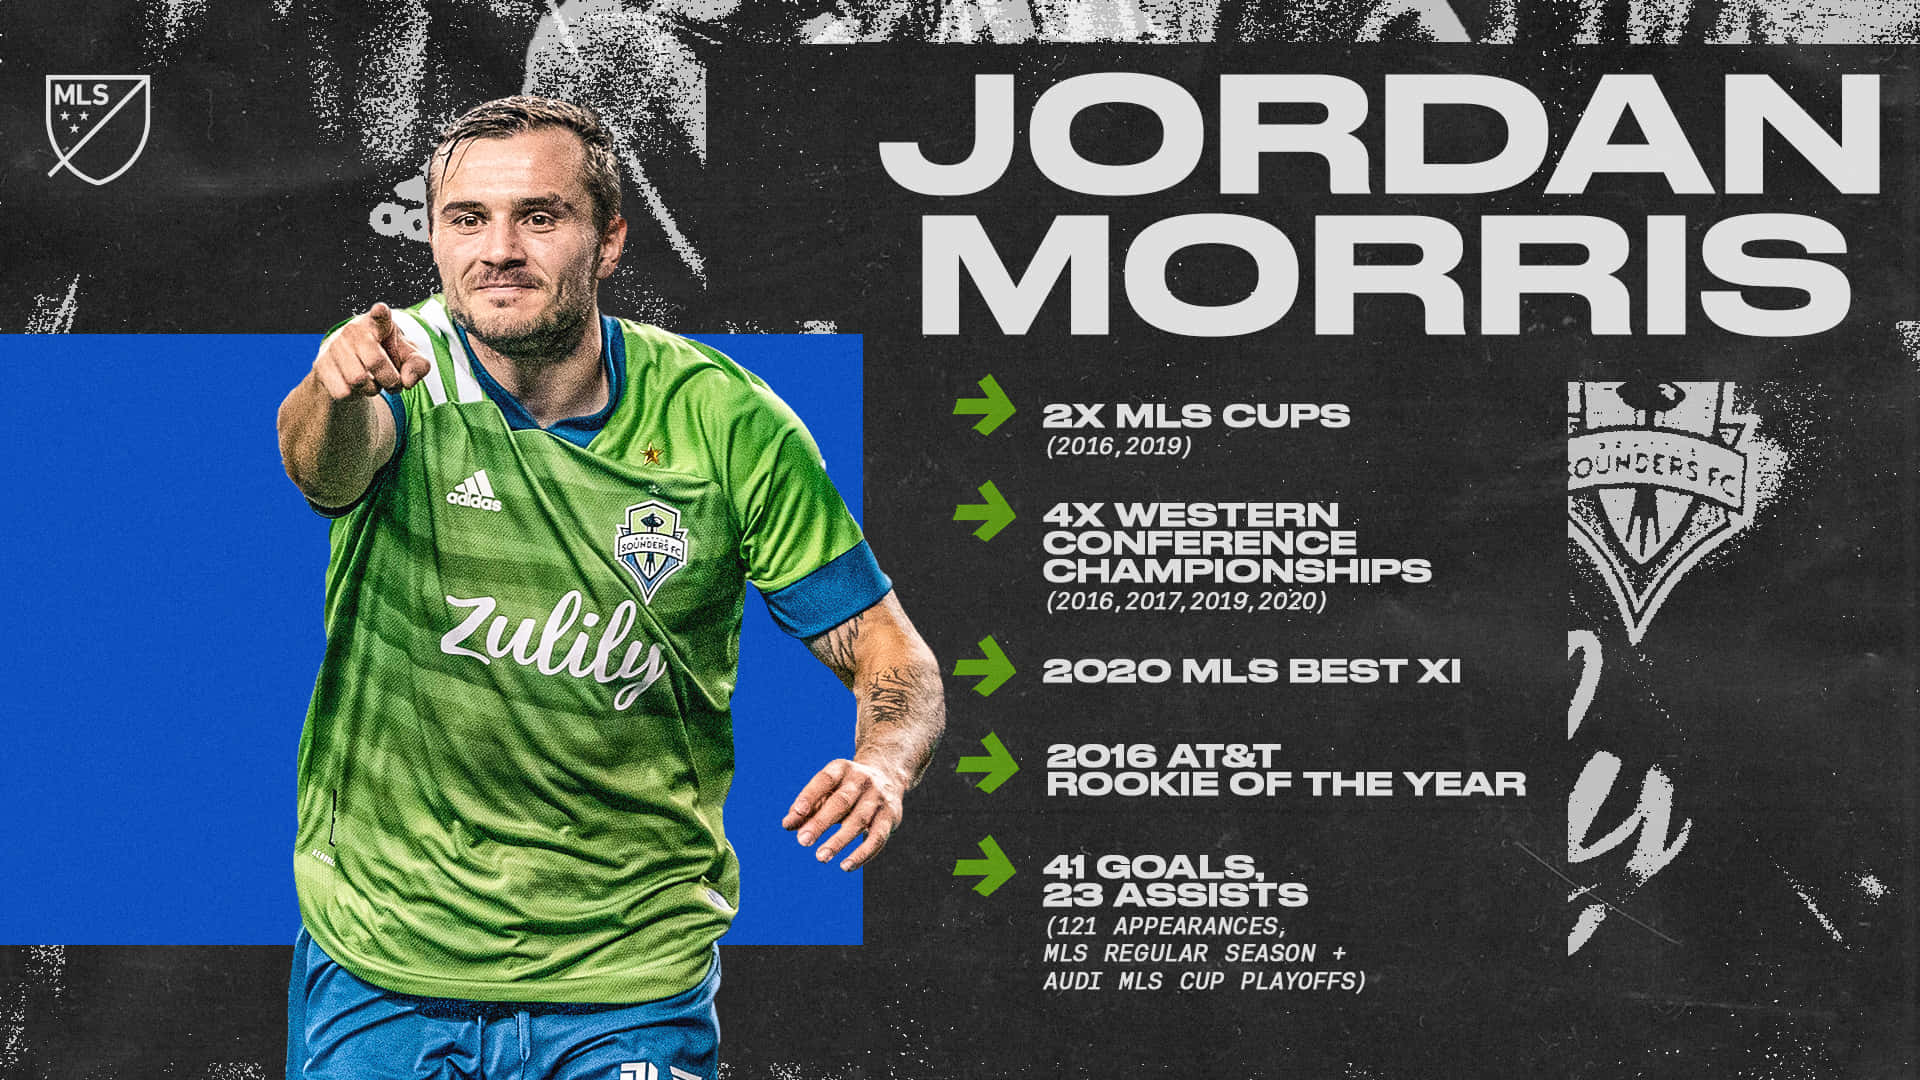 Amerikansk fodboldspiller Jordan Morris statistik tapet Wallpaper